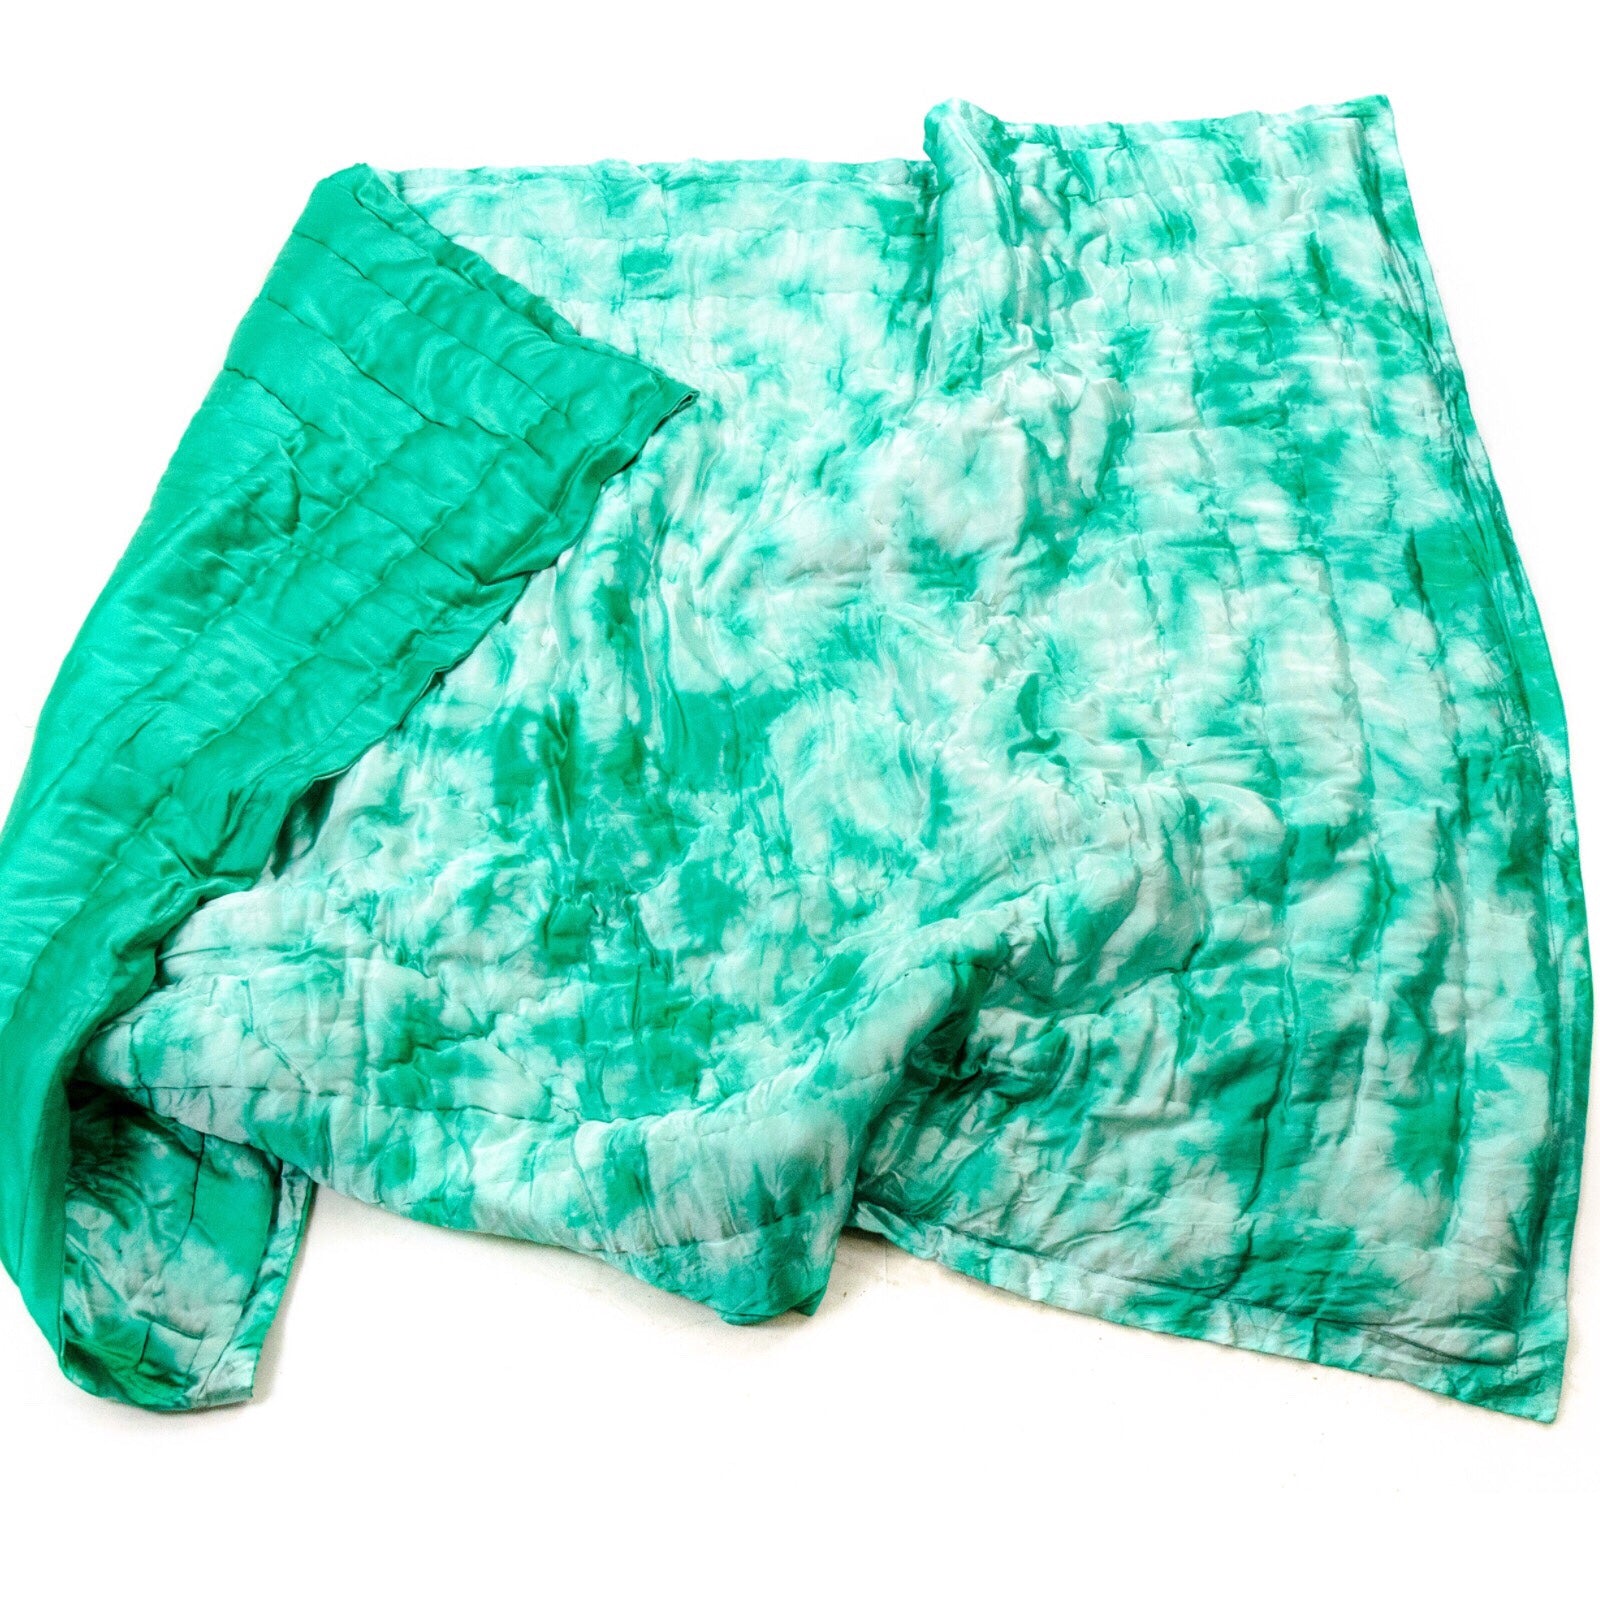 Jaipur Atelier Emerald Baby Quilt Throw